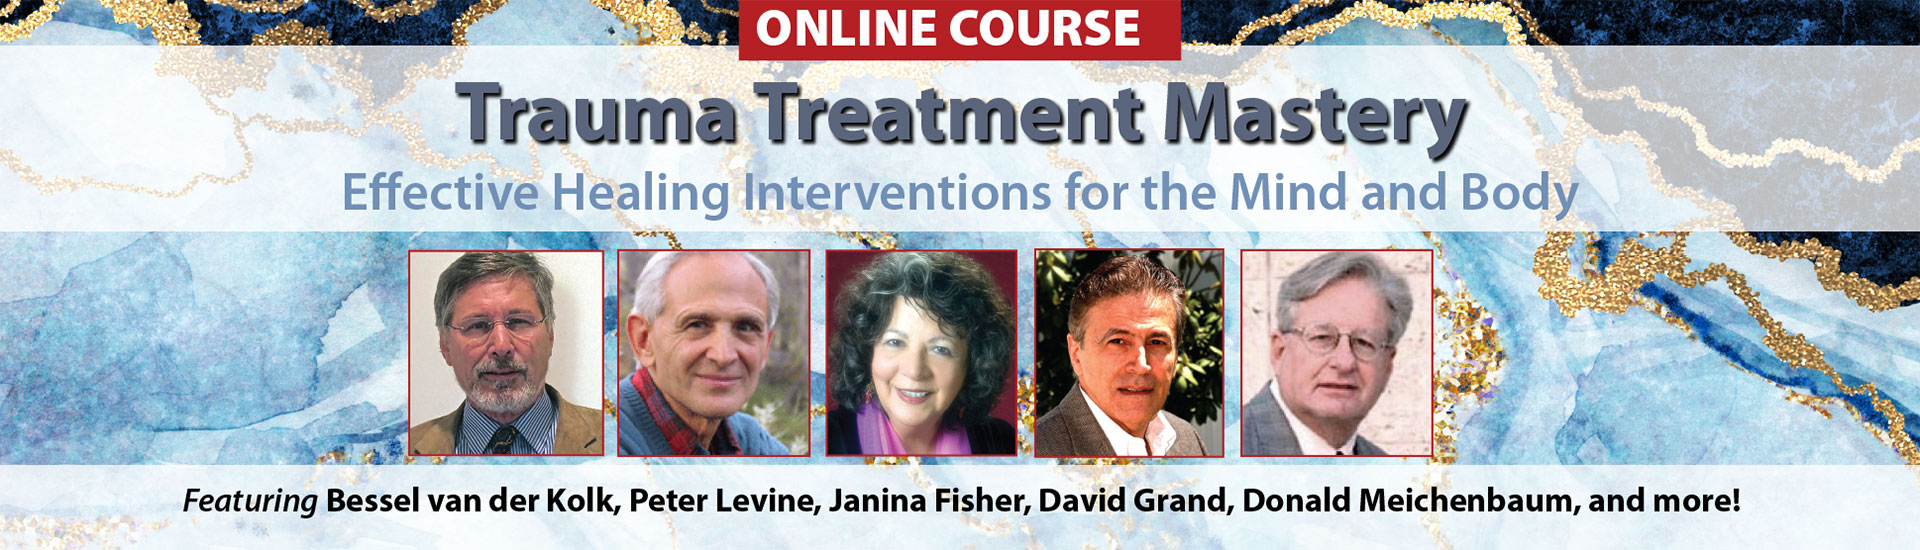 Trauma Treatment Mastery Online Course